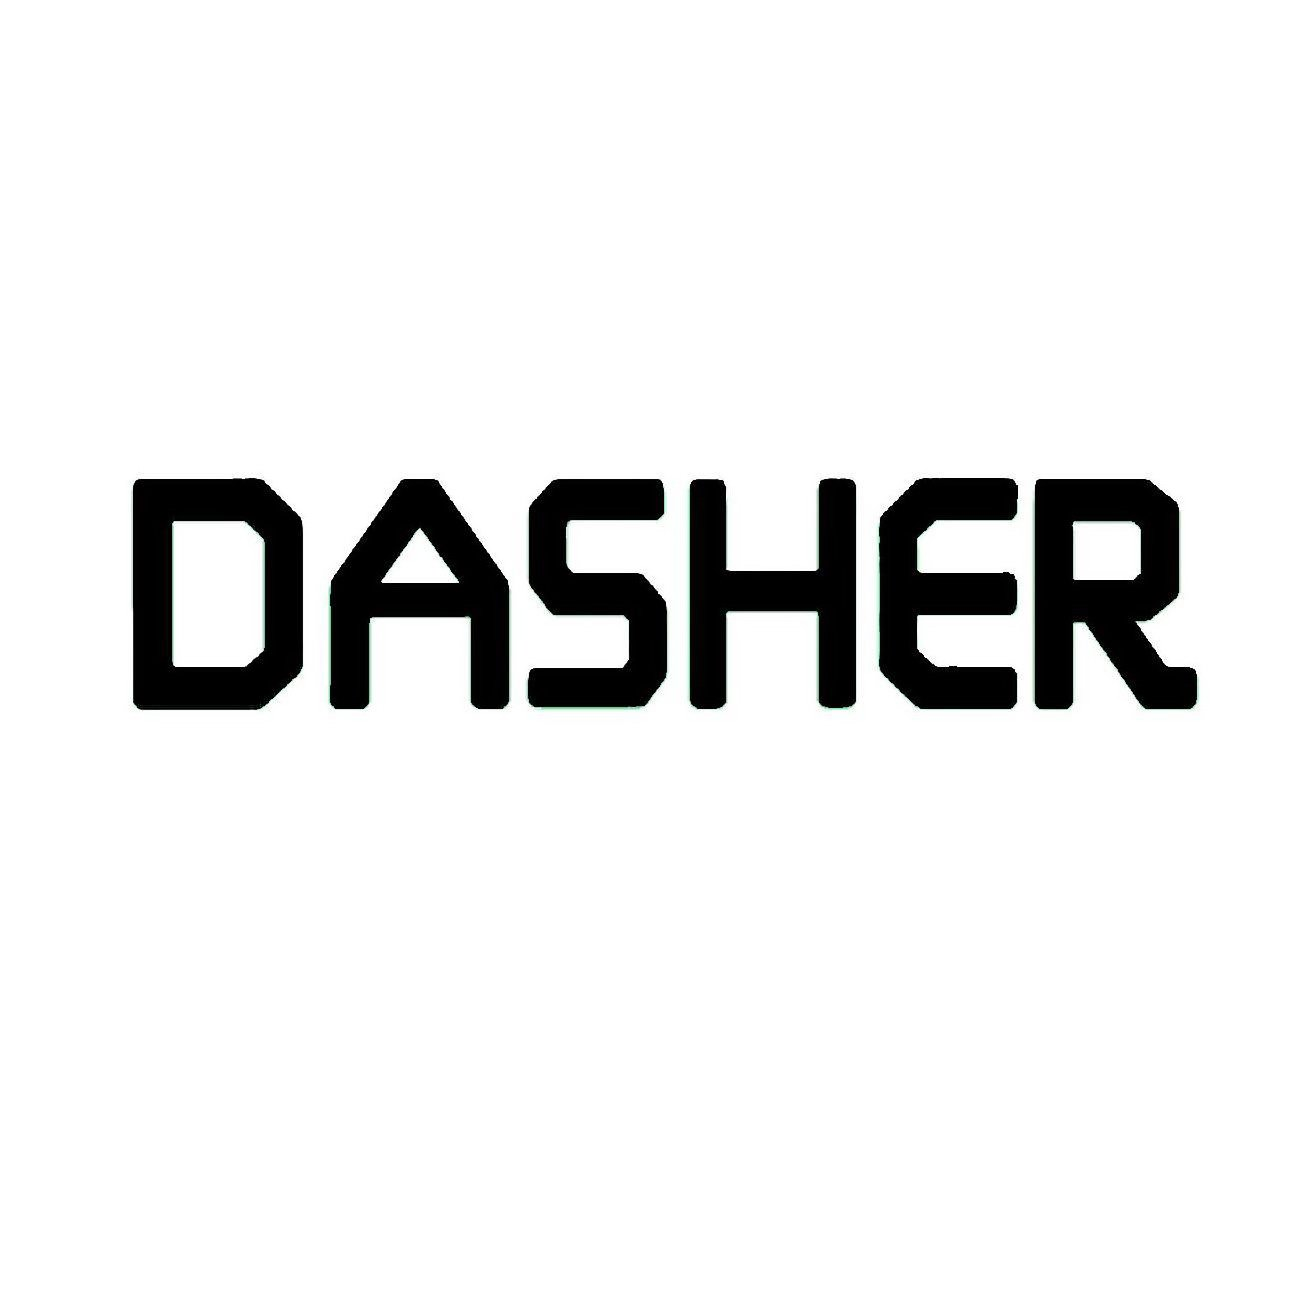 DASHER